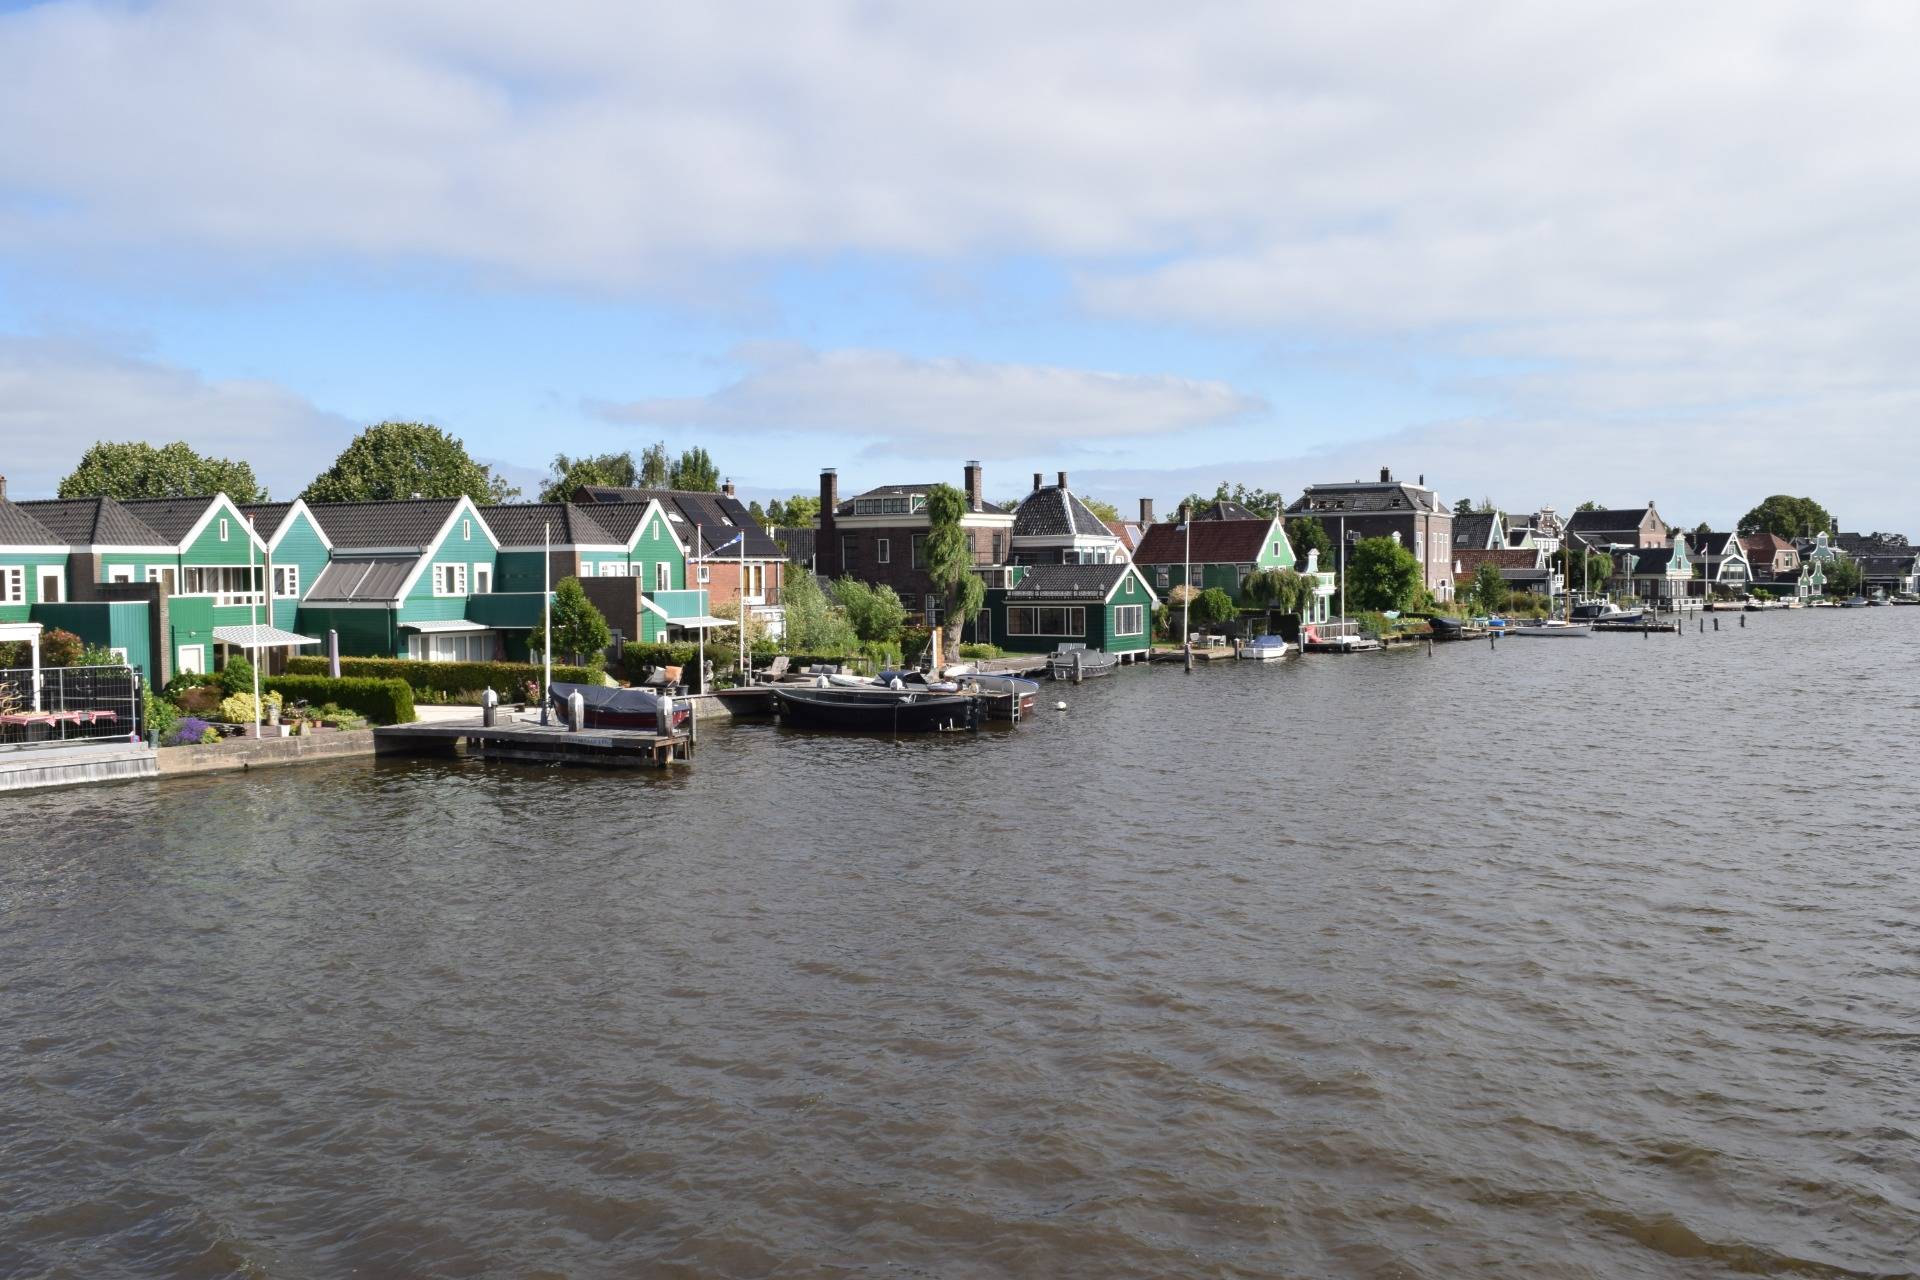 The picturesque Dutch town of Zaanse Schans